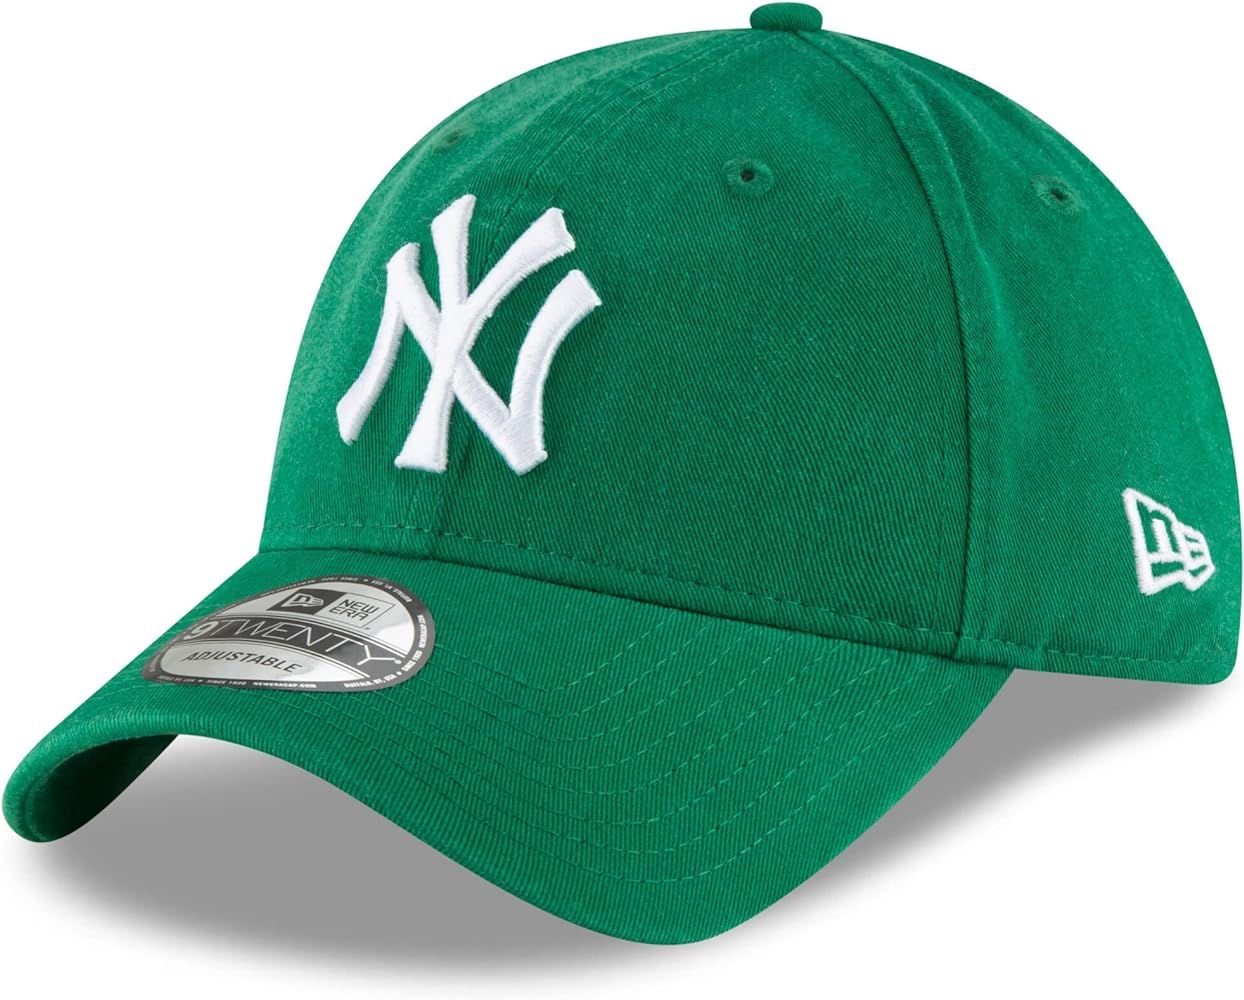 MLB Core Classic Khaki 9TWENTY Adjustable Hat Cap One Size Fits All | Amazon (US)